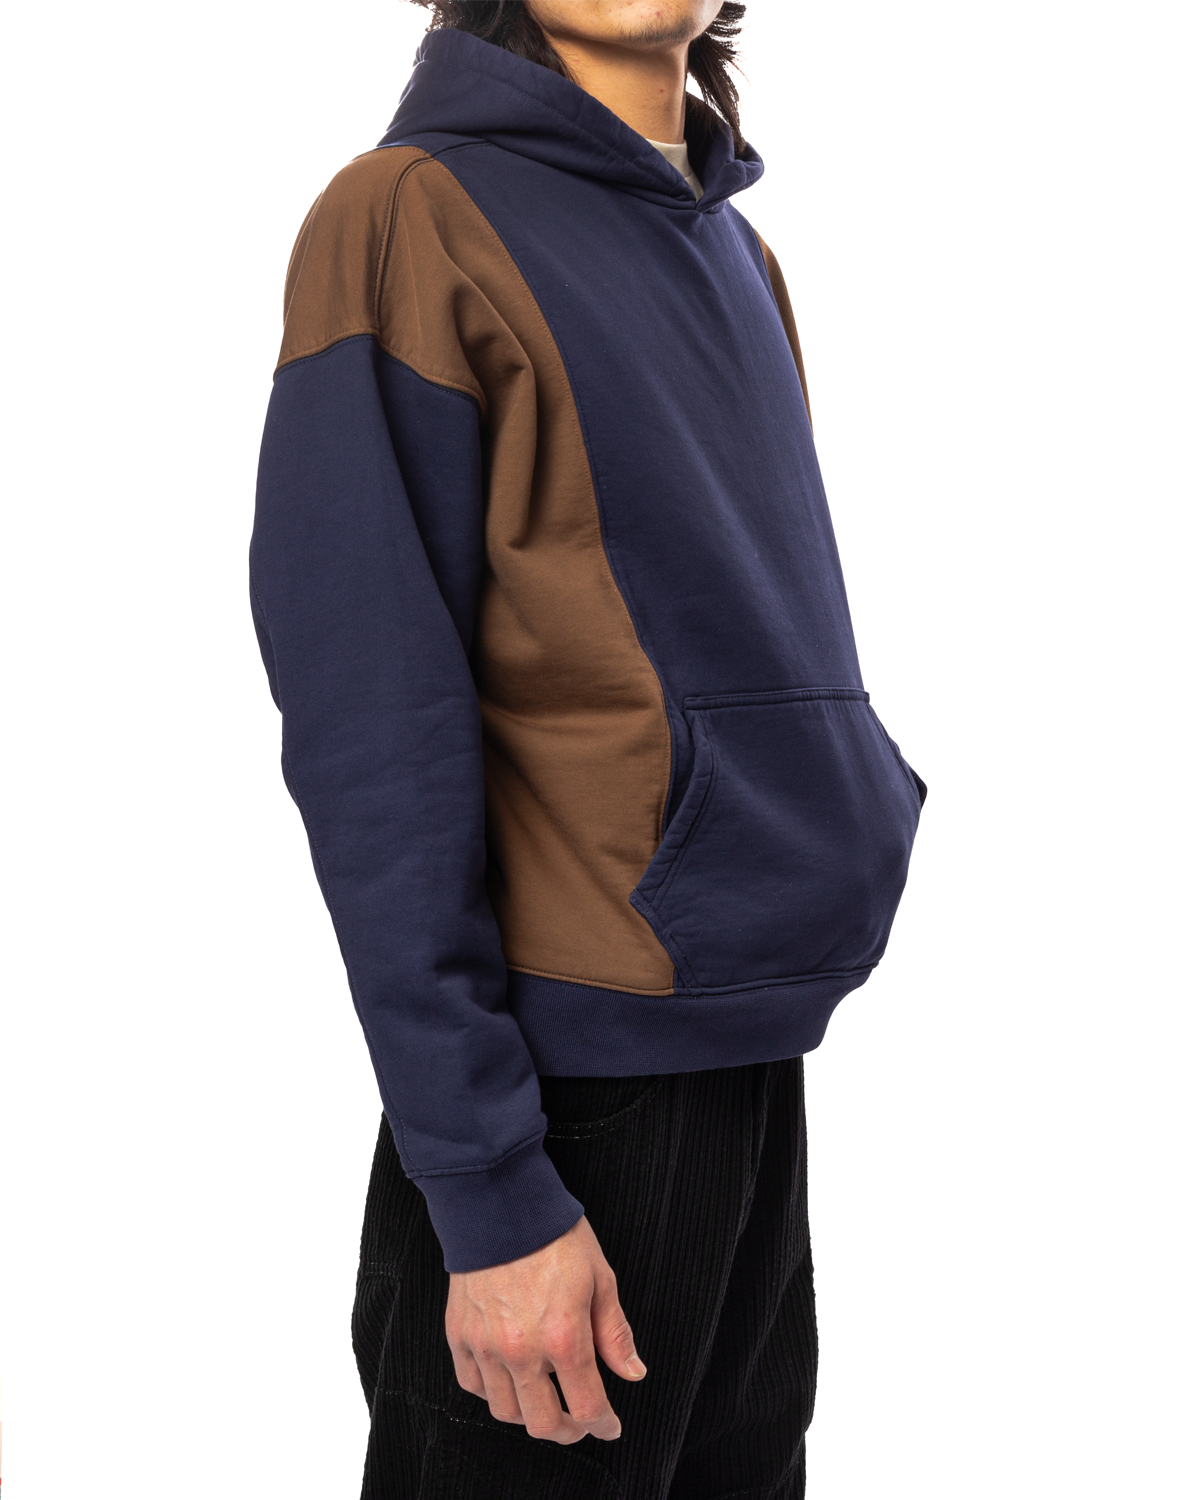 Mendoza Cropped Hooded Sweatshirt Navy